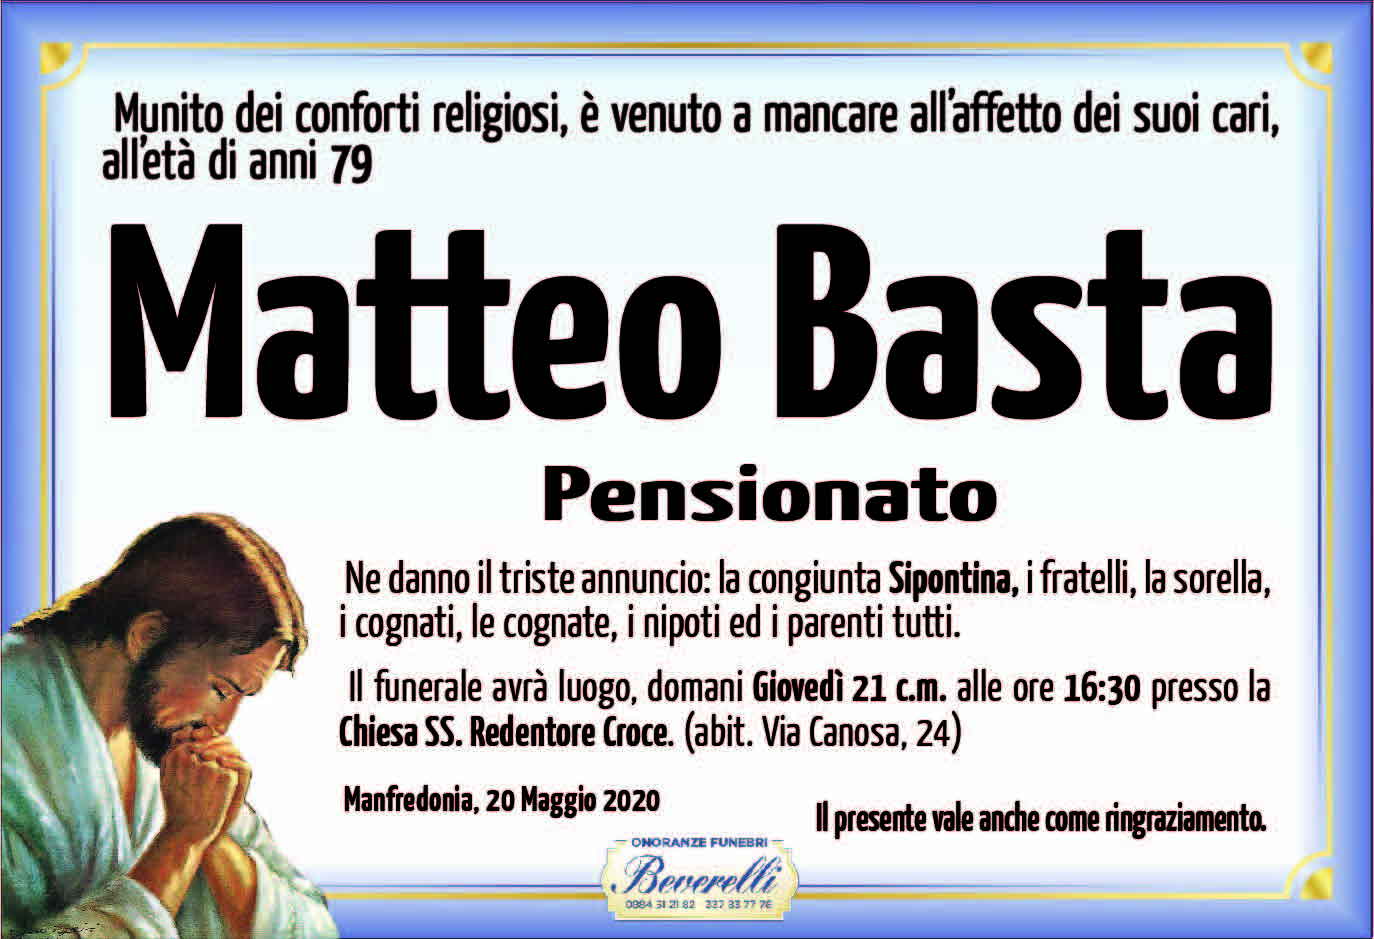 Matteo Basta